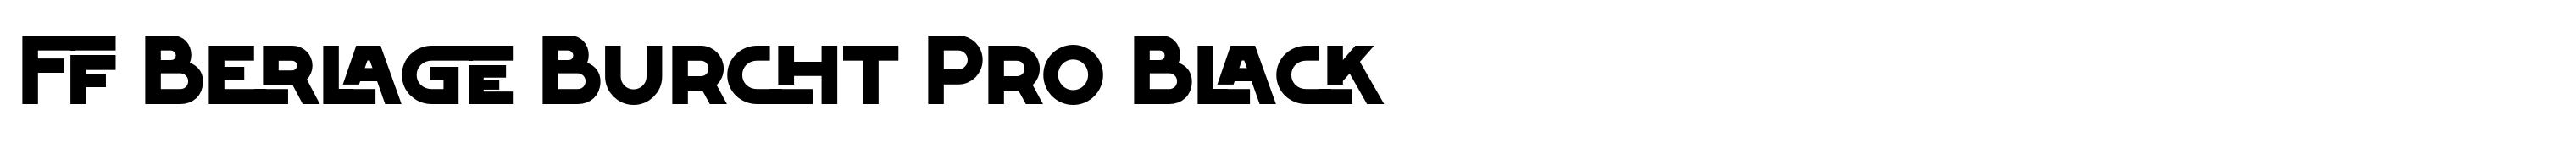 FF Berlage Burcht Pro Black